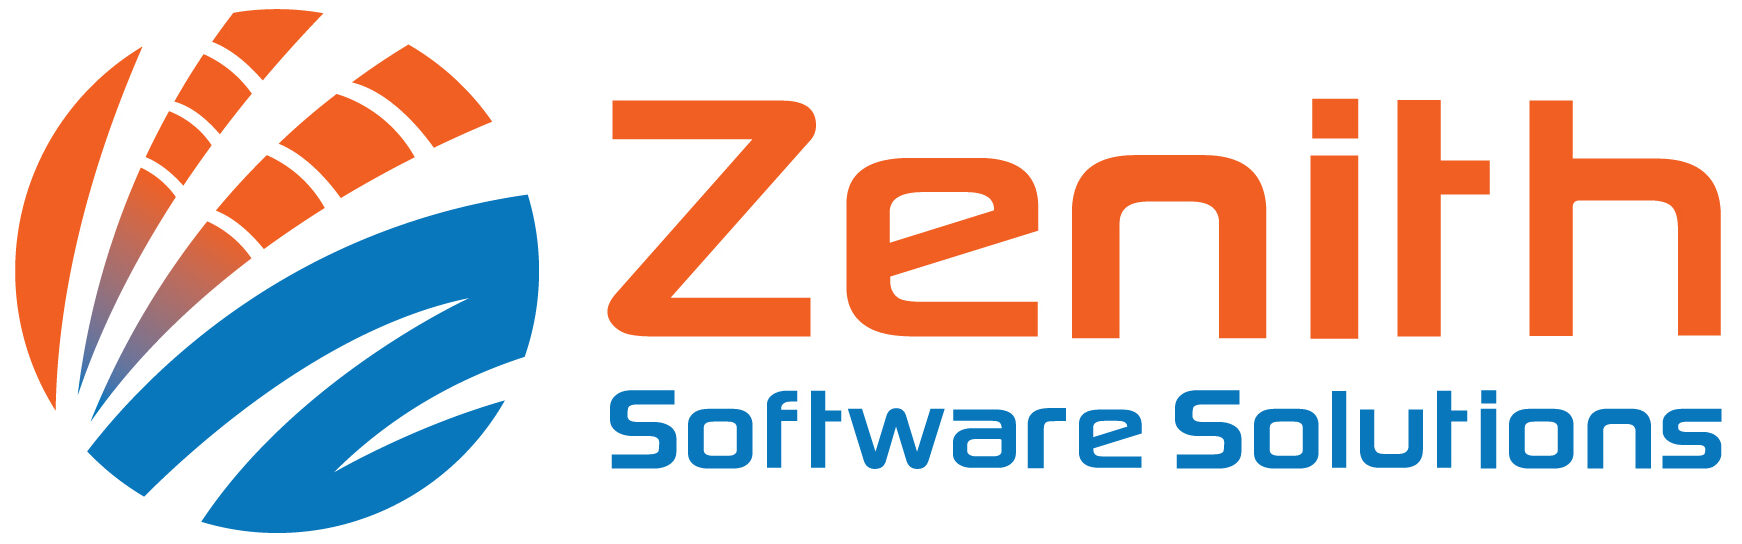 Zenith Software Solutions Inc.